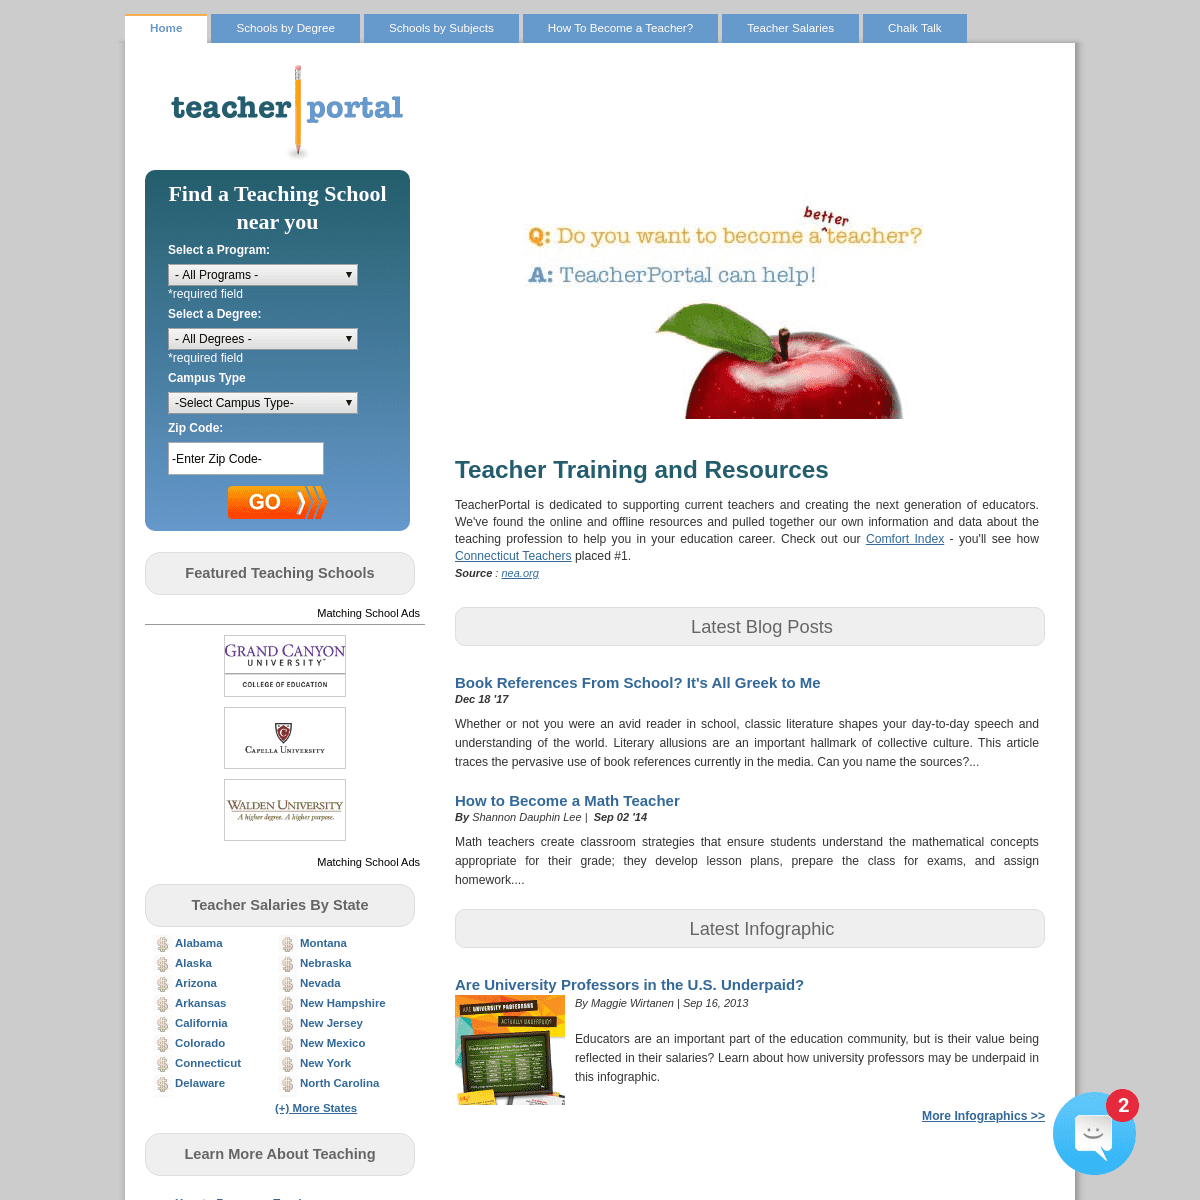 A complete backup of teacherportal.com